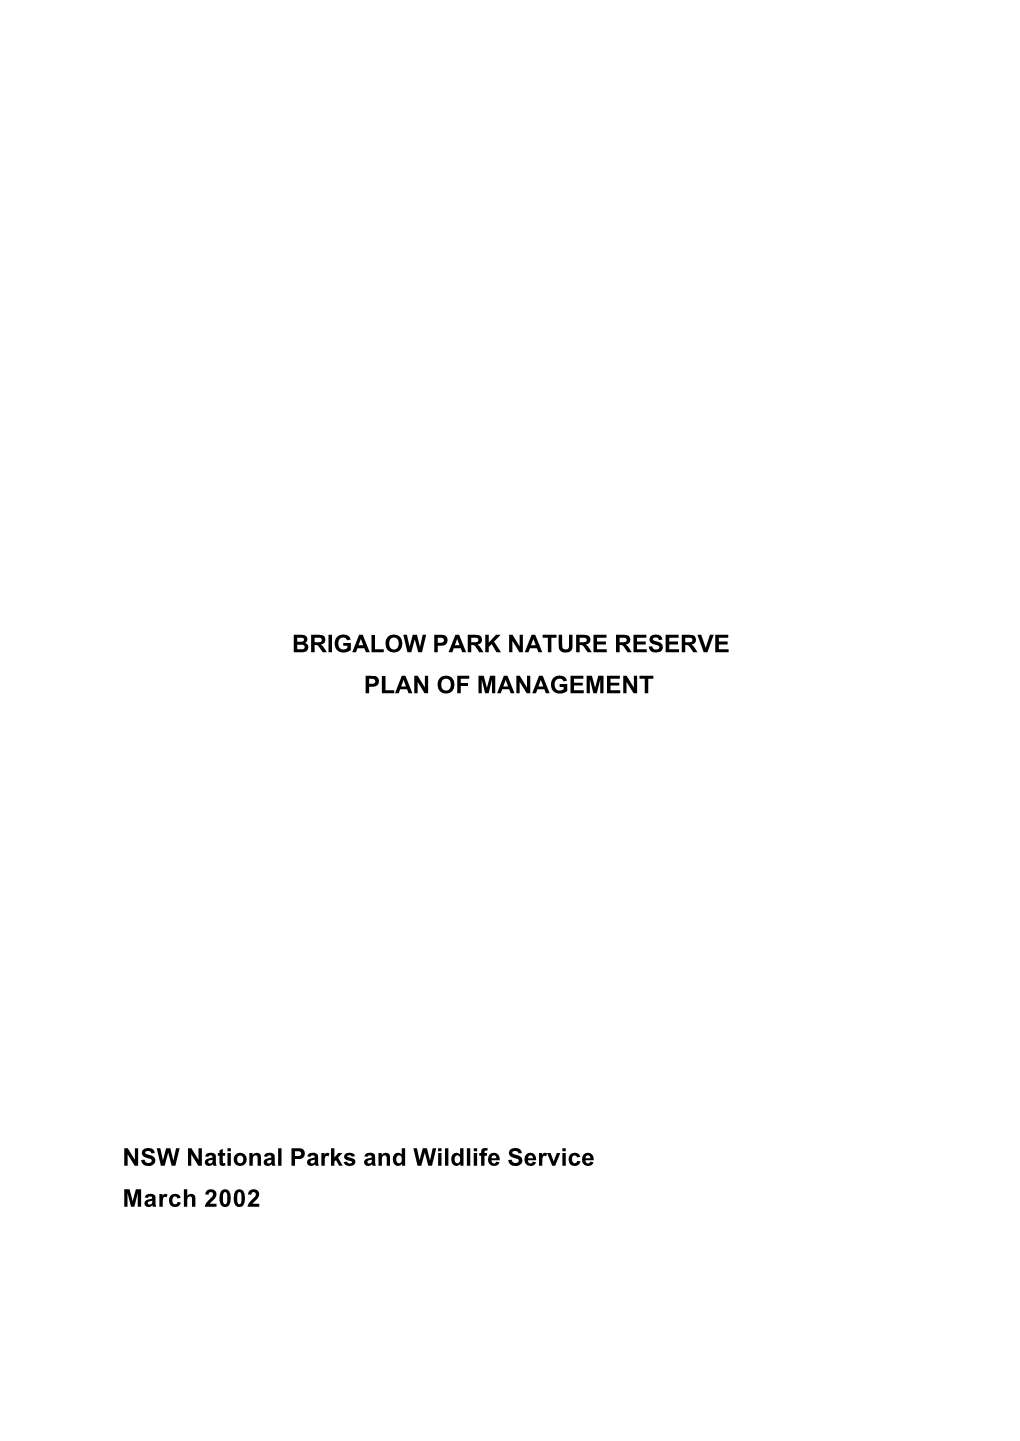 Brigalow Park Nature Reserve Plan of Management